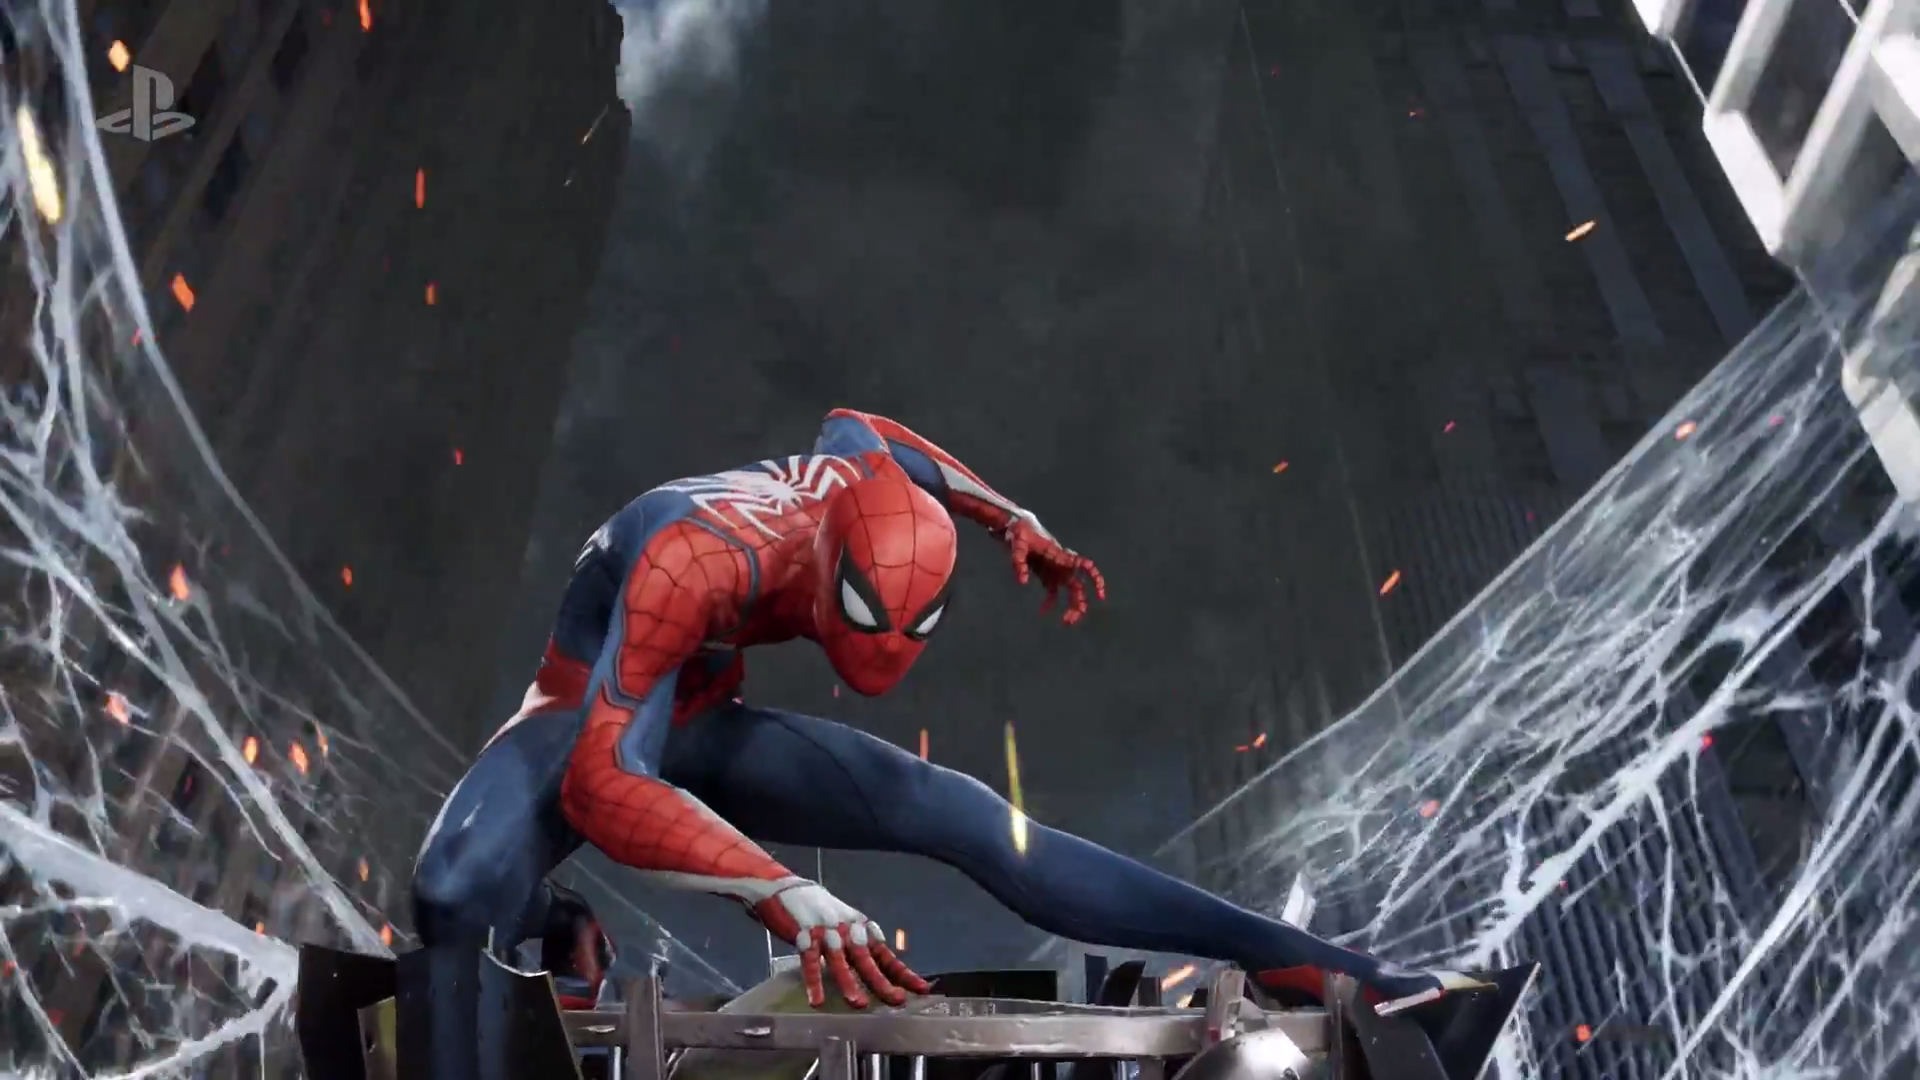 Spiderman screenshot perched